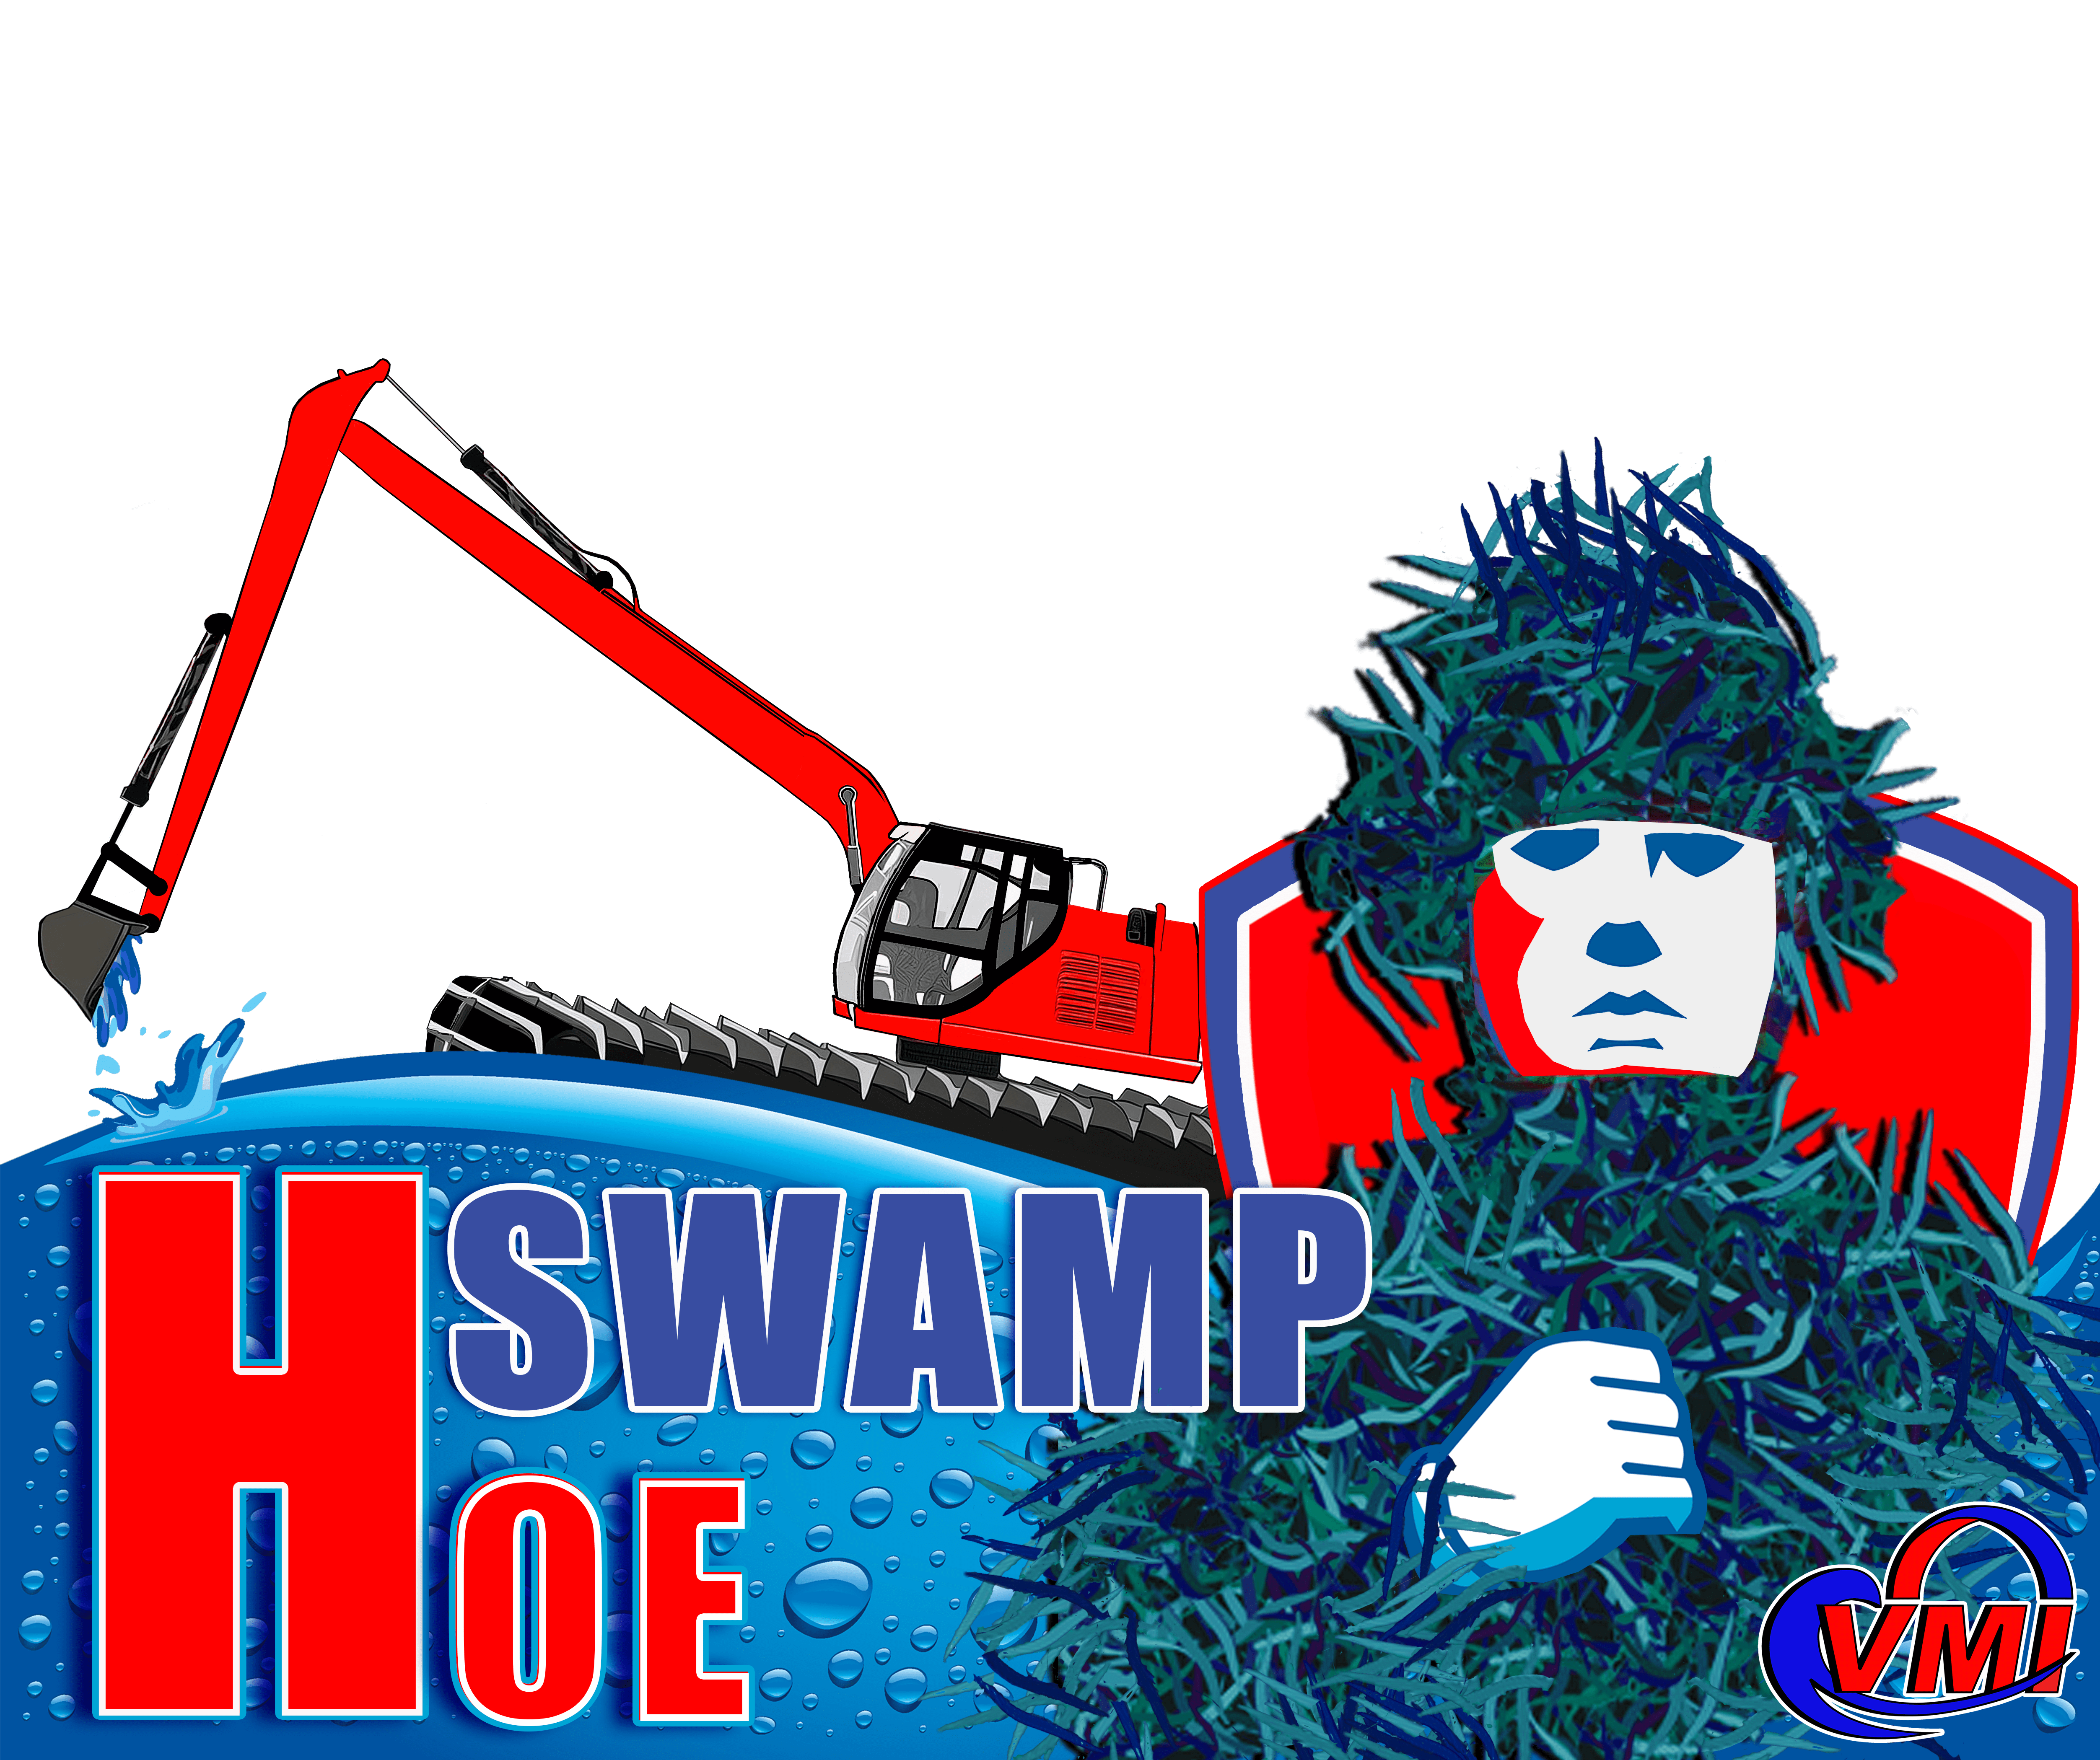 VMI Swamp Hoe Logo